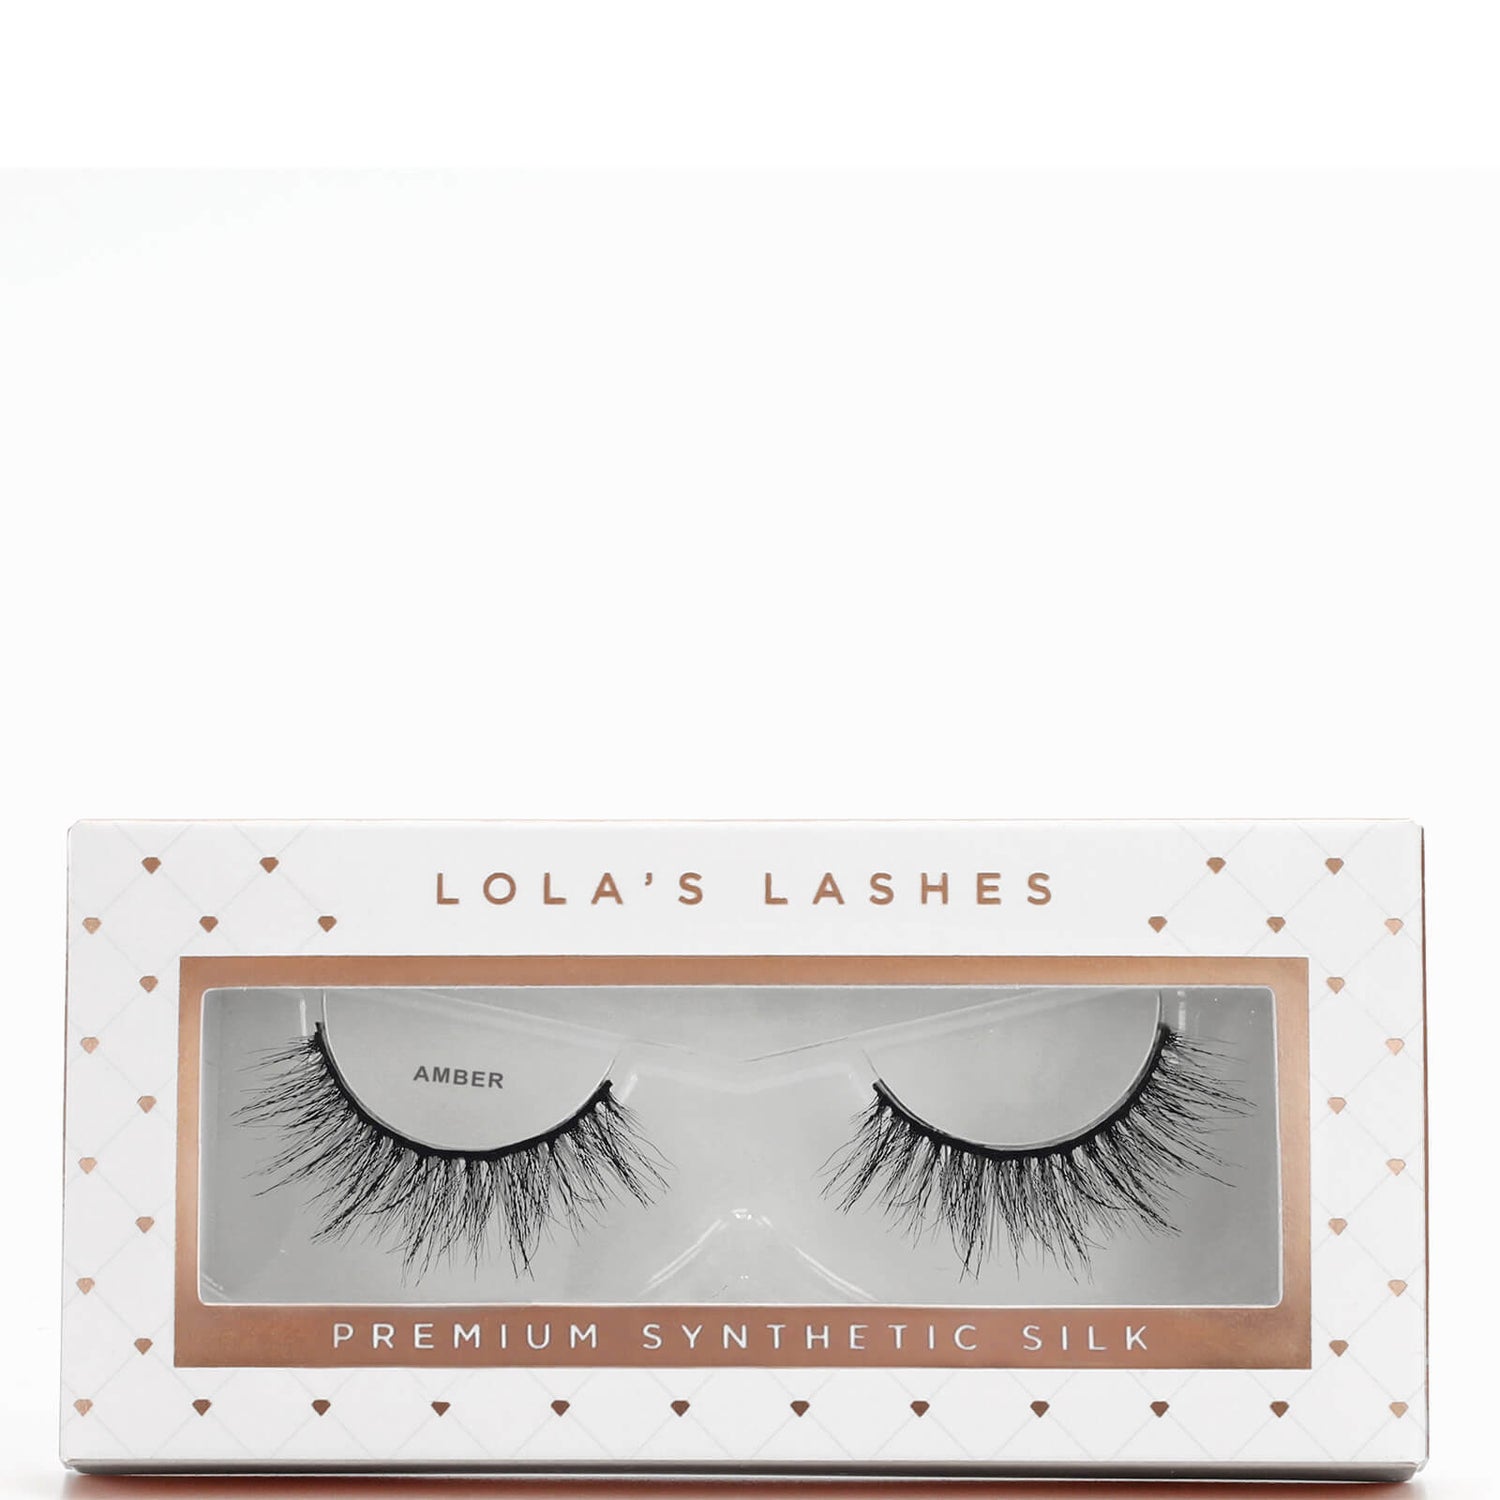 Lola's Lashes Amber Strip Eyelashes